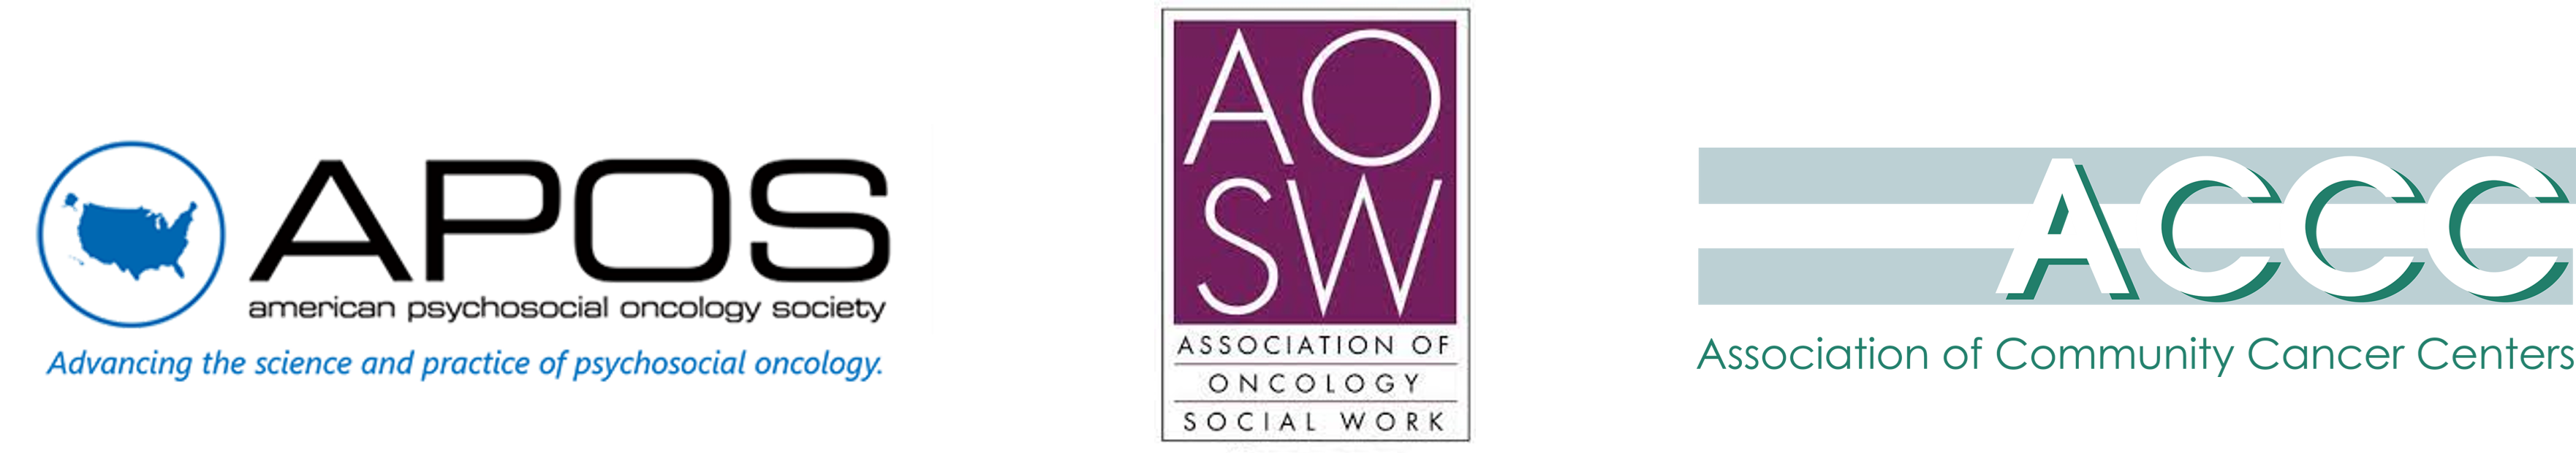 APOS, AOSW & ACCC Joint Virtual Conference APOS